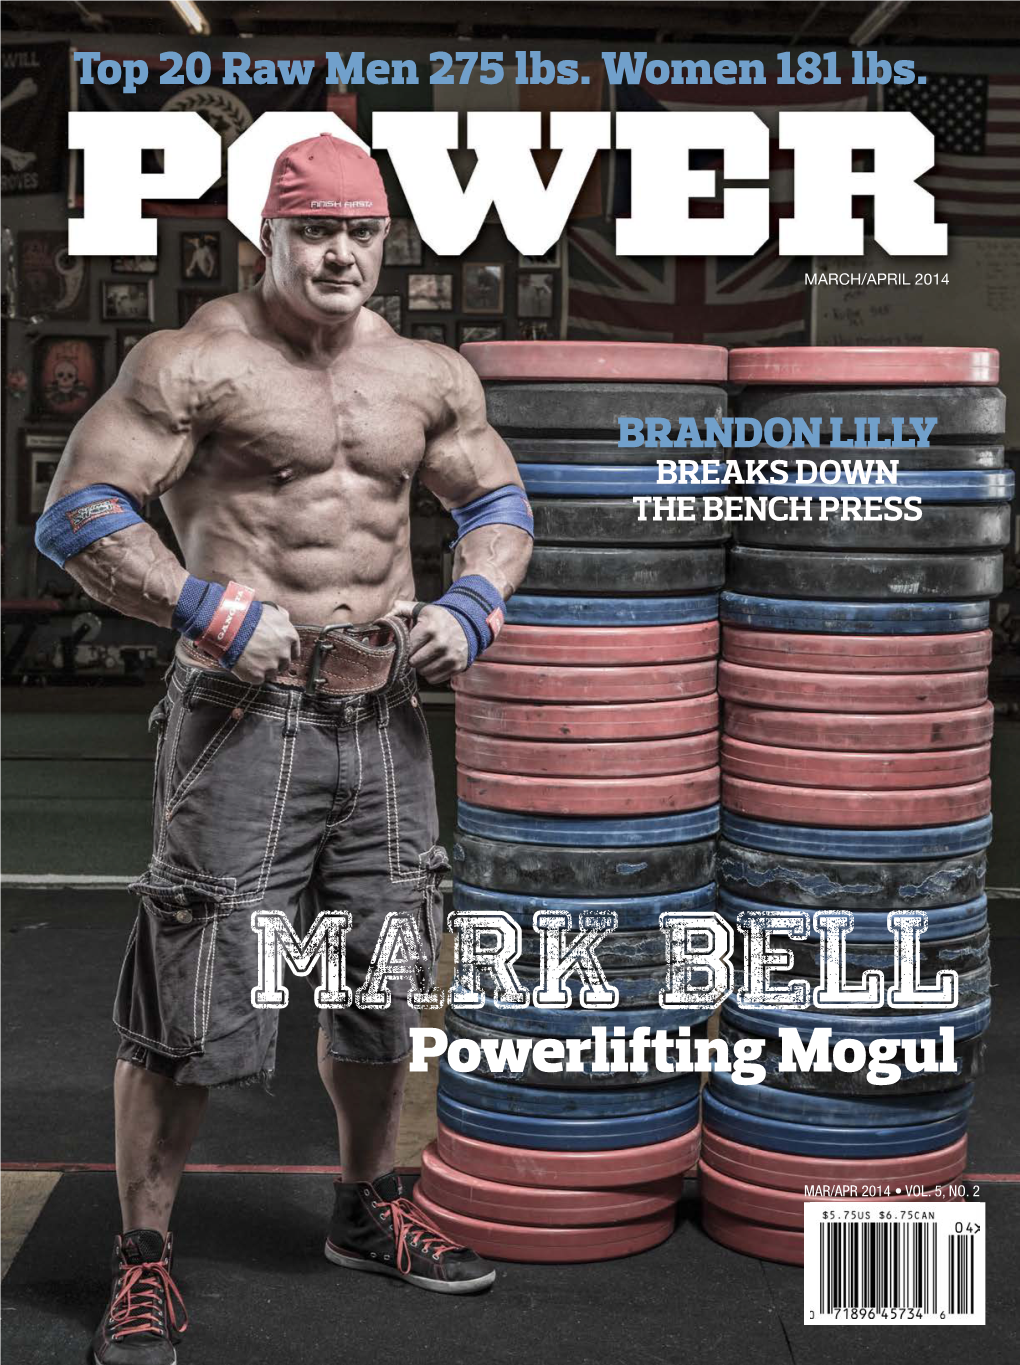 MARK BELL Powerlifting Mogul